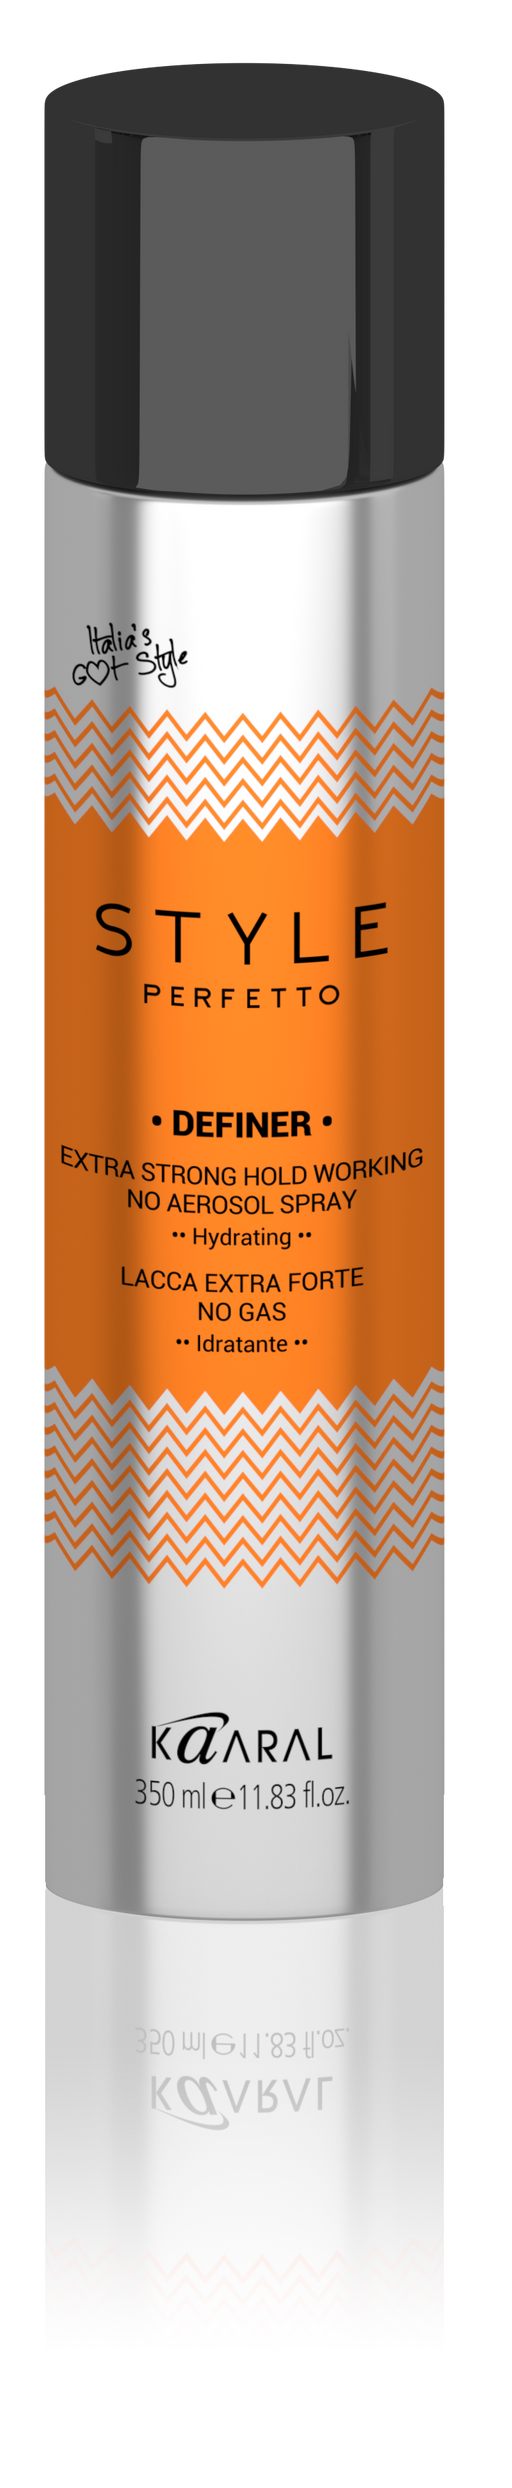 Kaaral Style Perfetto Definer Hairspray (Non-Aerosol) - Clearance!